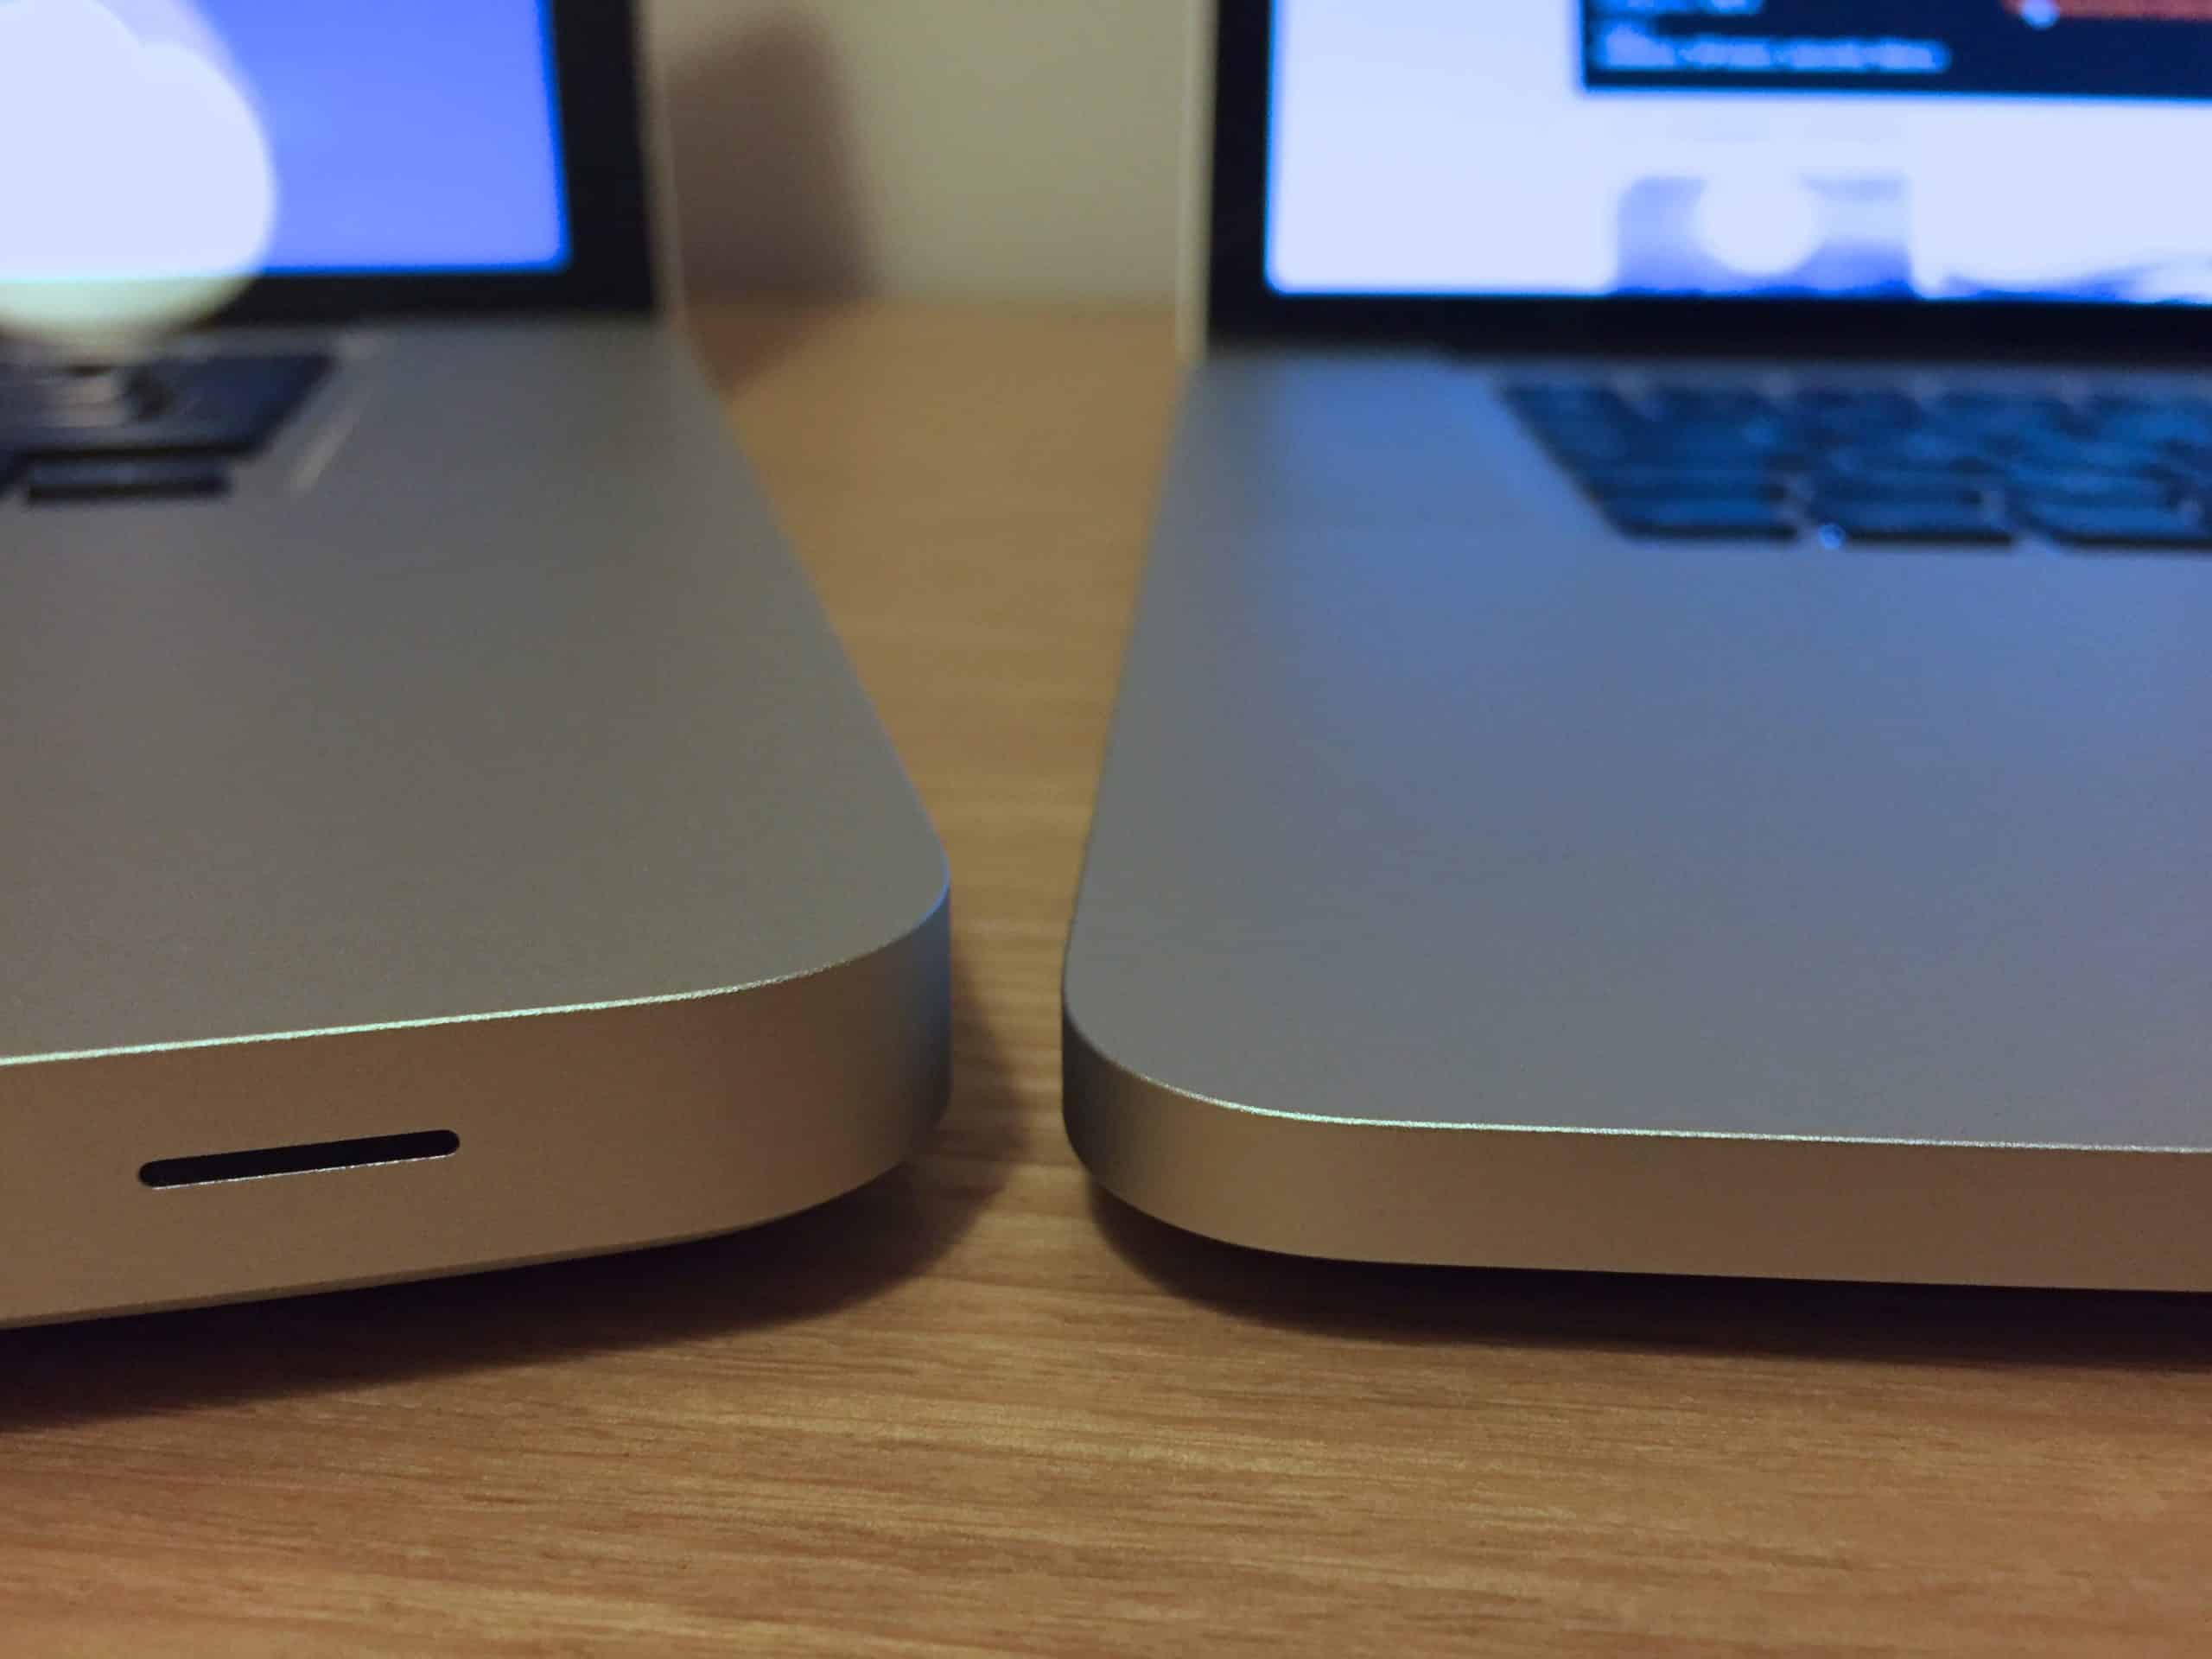 Difference macbook pro macbook pro retina00005